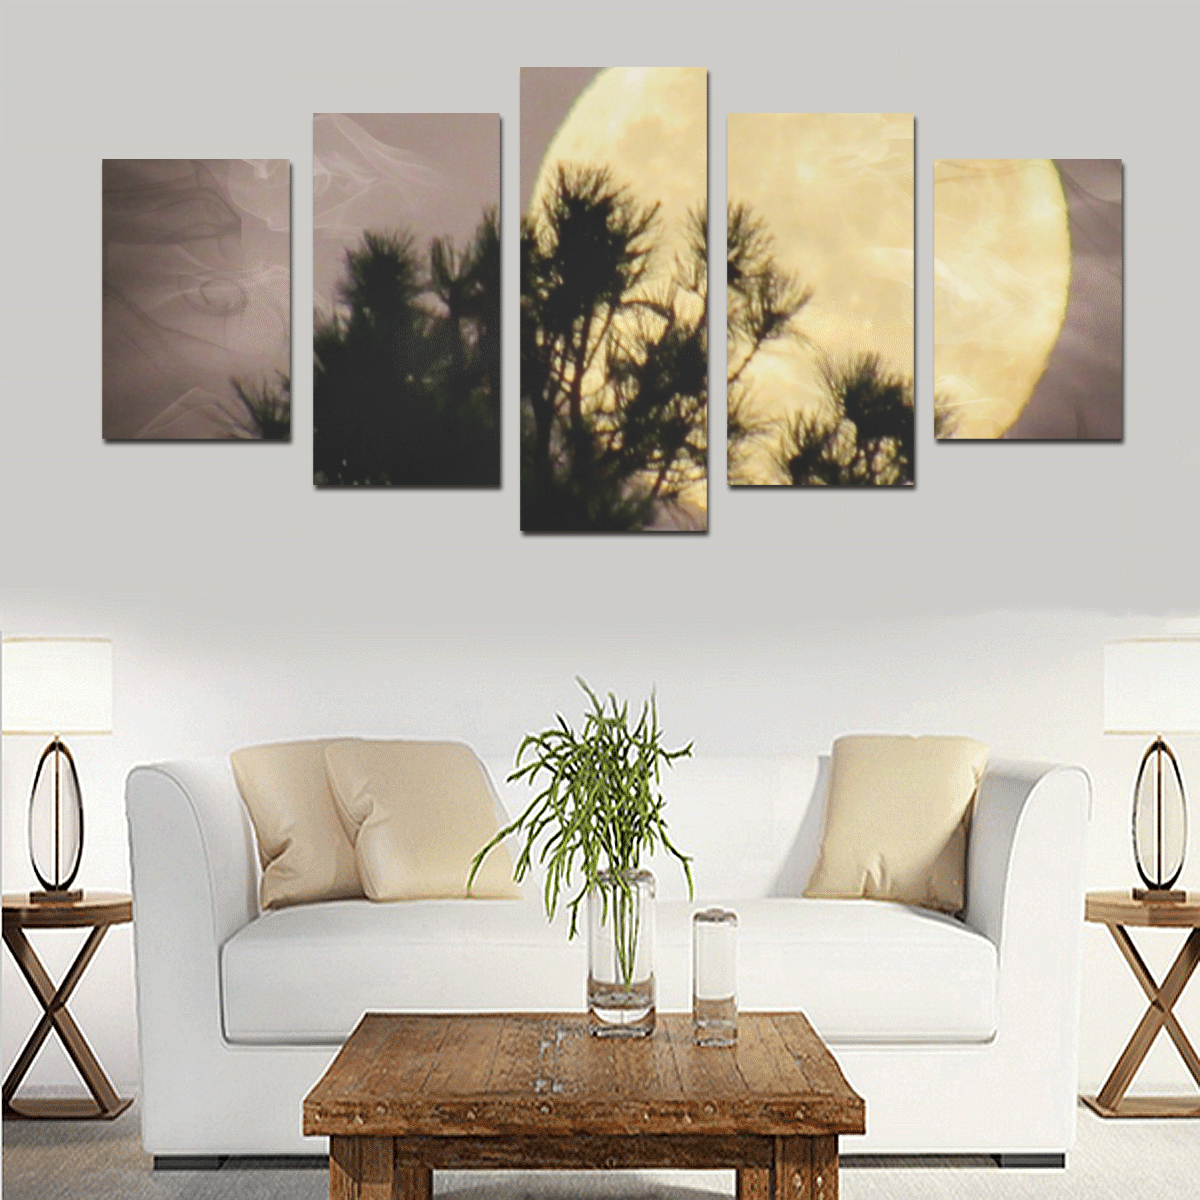 Moonsmoke Canvas Set by Martina Webster Canvas Print Sets D (No Frame)